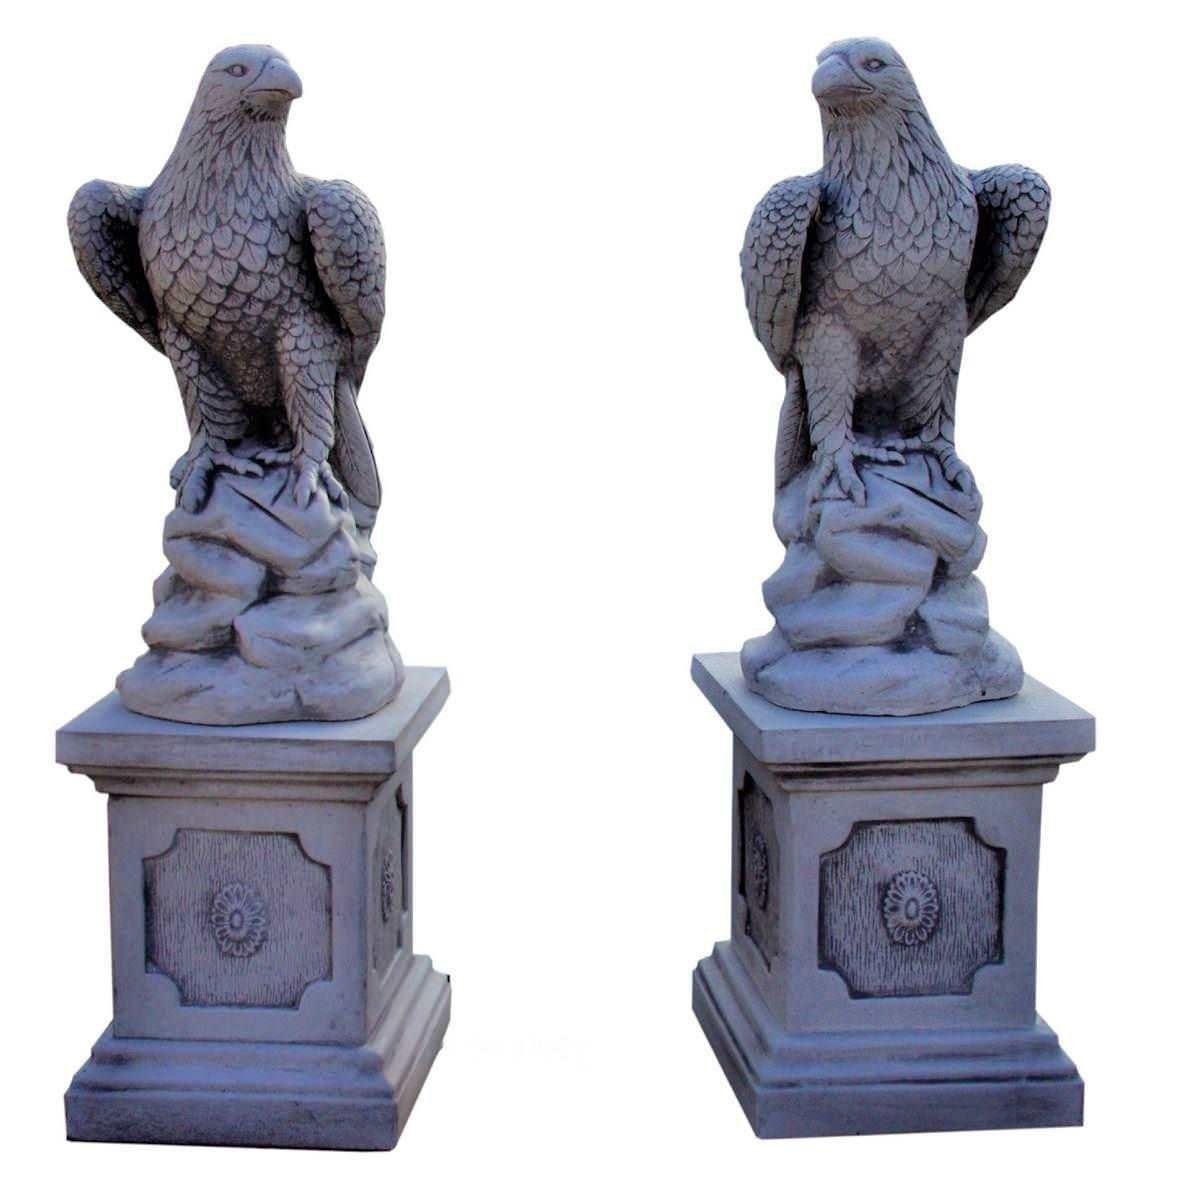 Antikes Wohndesign Gartenfigur 2 x Greifvogel 2 x Säulensockel sitzend Adler